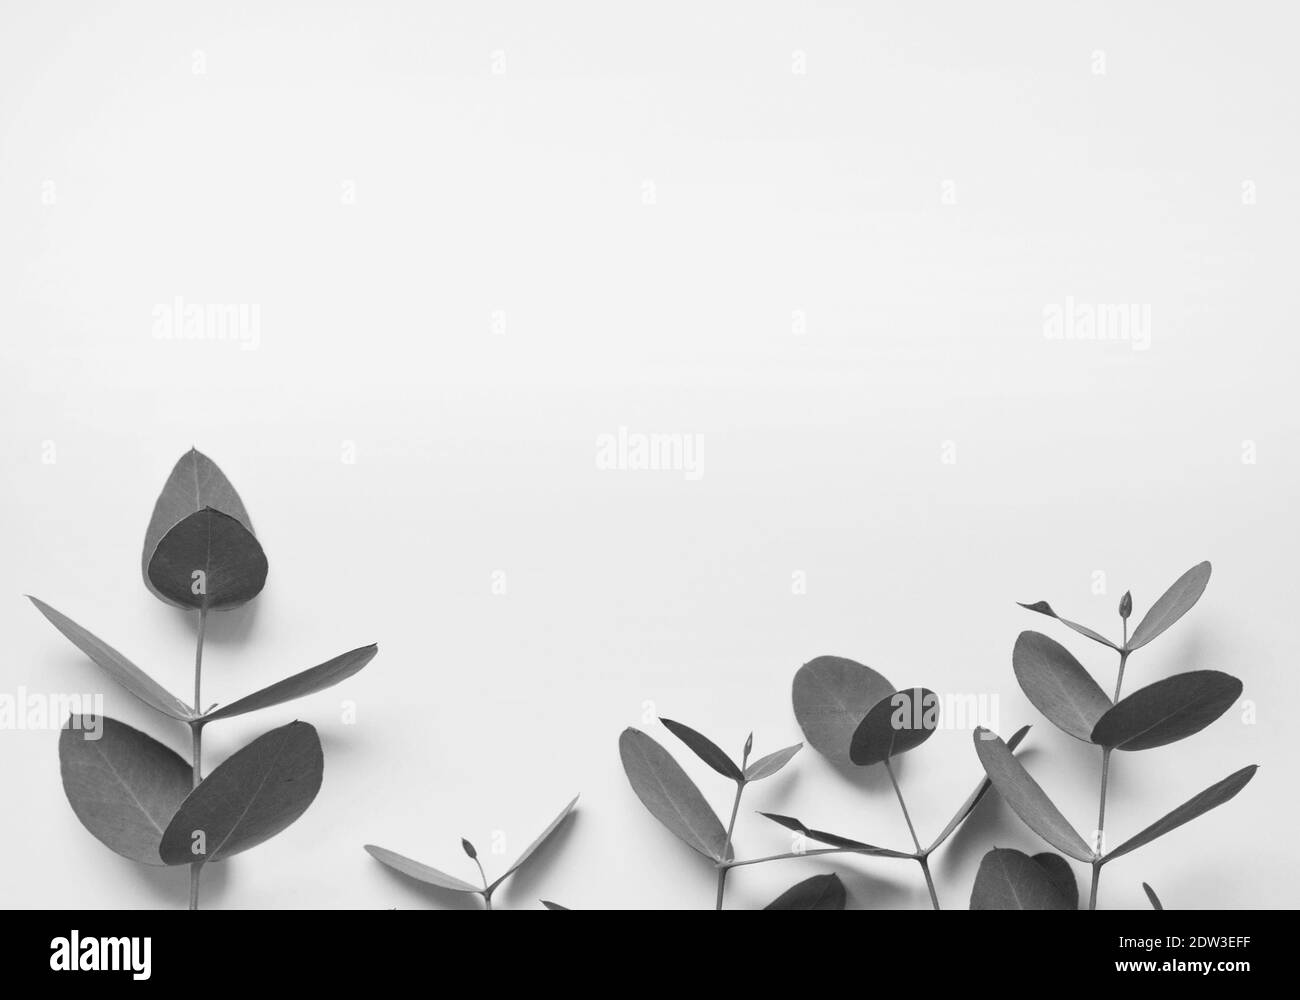 Eukalyptuszweige. Ultimate grau, trendy Farbe 2021 Flat Lay, Draufsicht Stockfoto